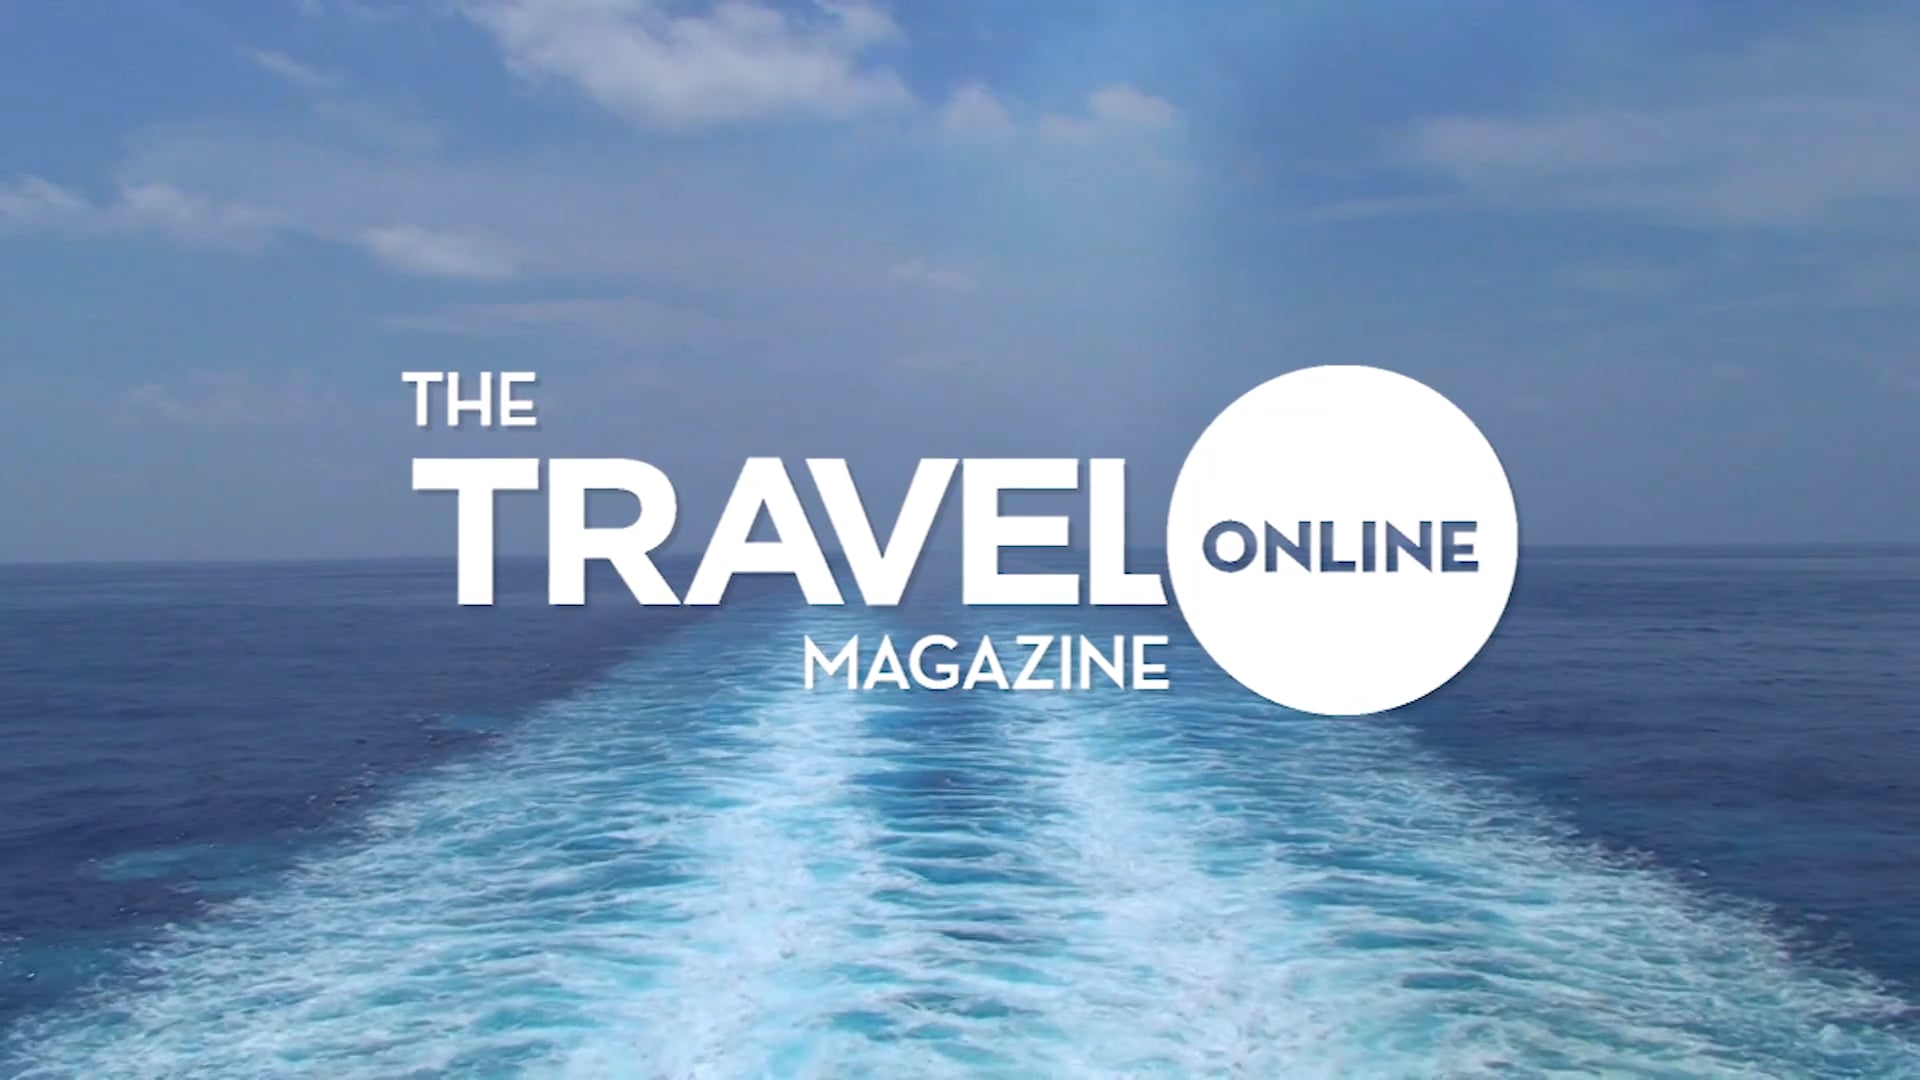 the travel magazine online